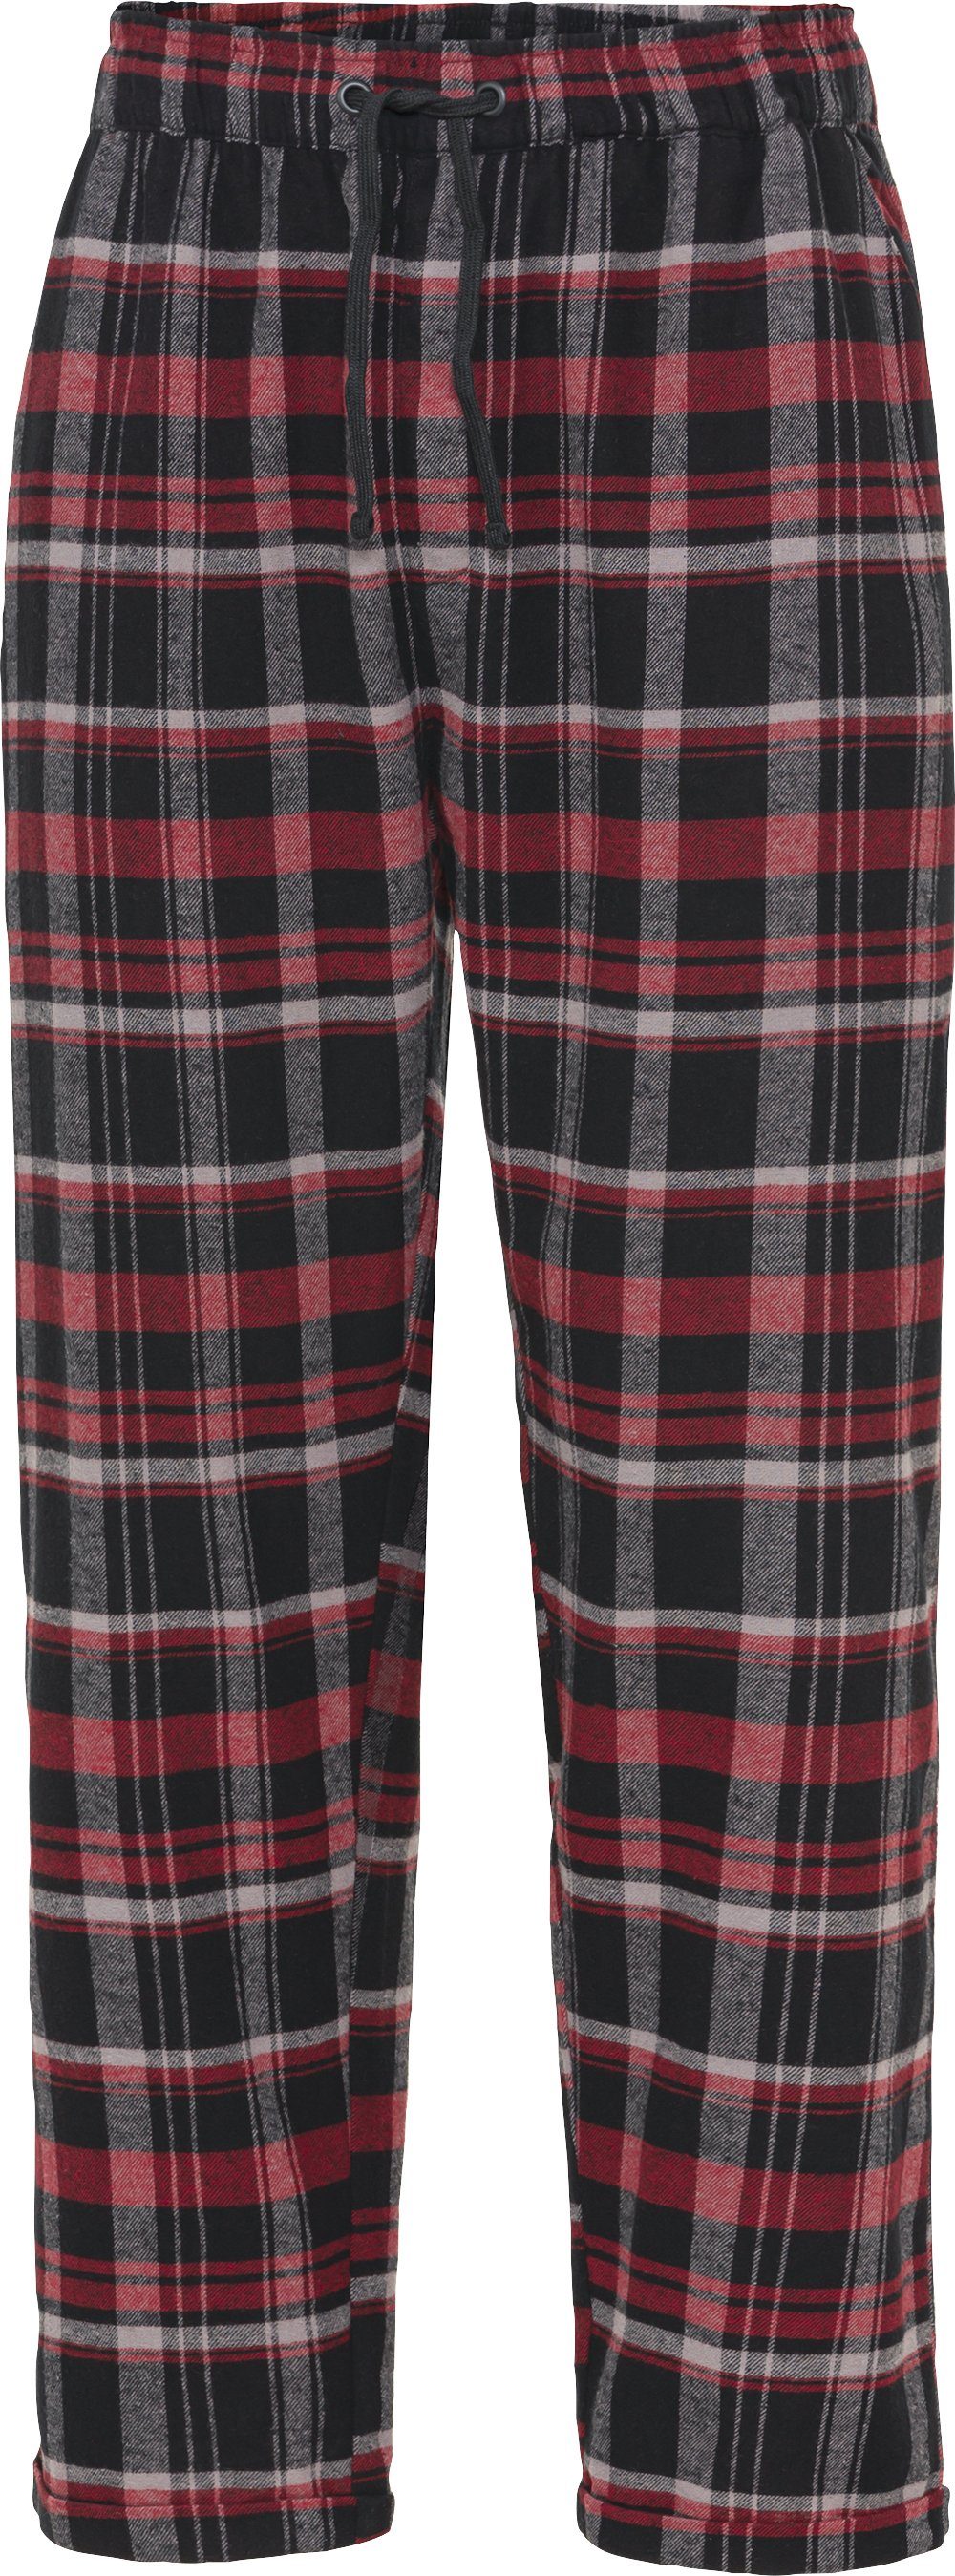 Franco Bettoni Pyjama (Set, tlg., aus 1 Stück) weich angerauter 2 Baumwolle bordeaux